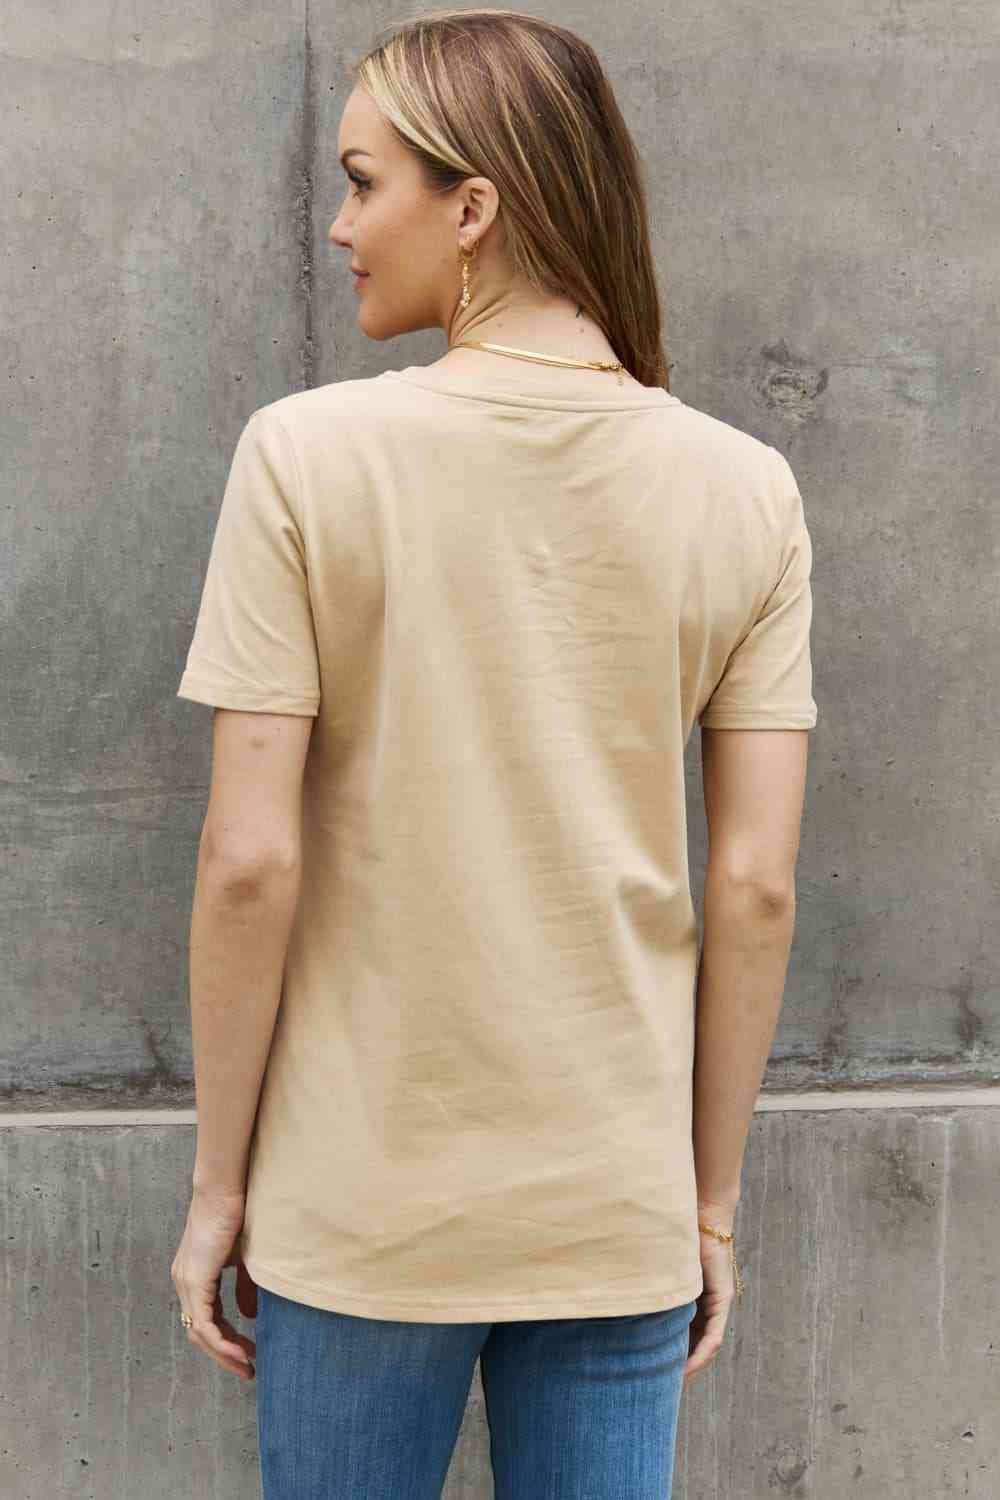 ARIZONA DESERT VIBES FEEL THE SUNSET Graphic Cotton Tee - T-Shirts - Shirts & Tops - 6 - 2024